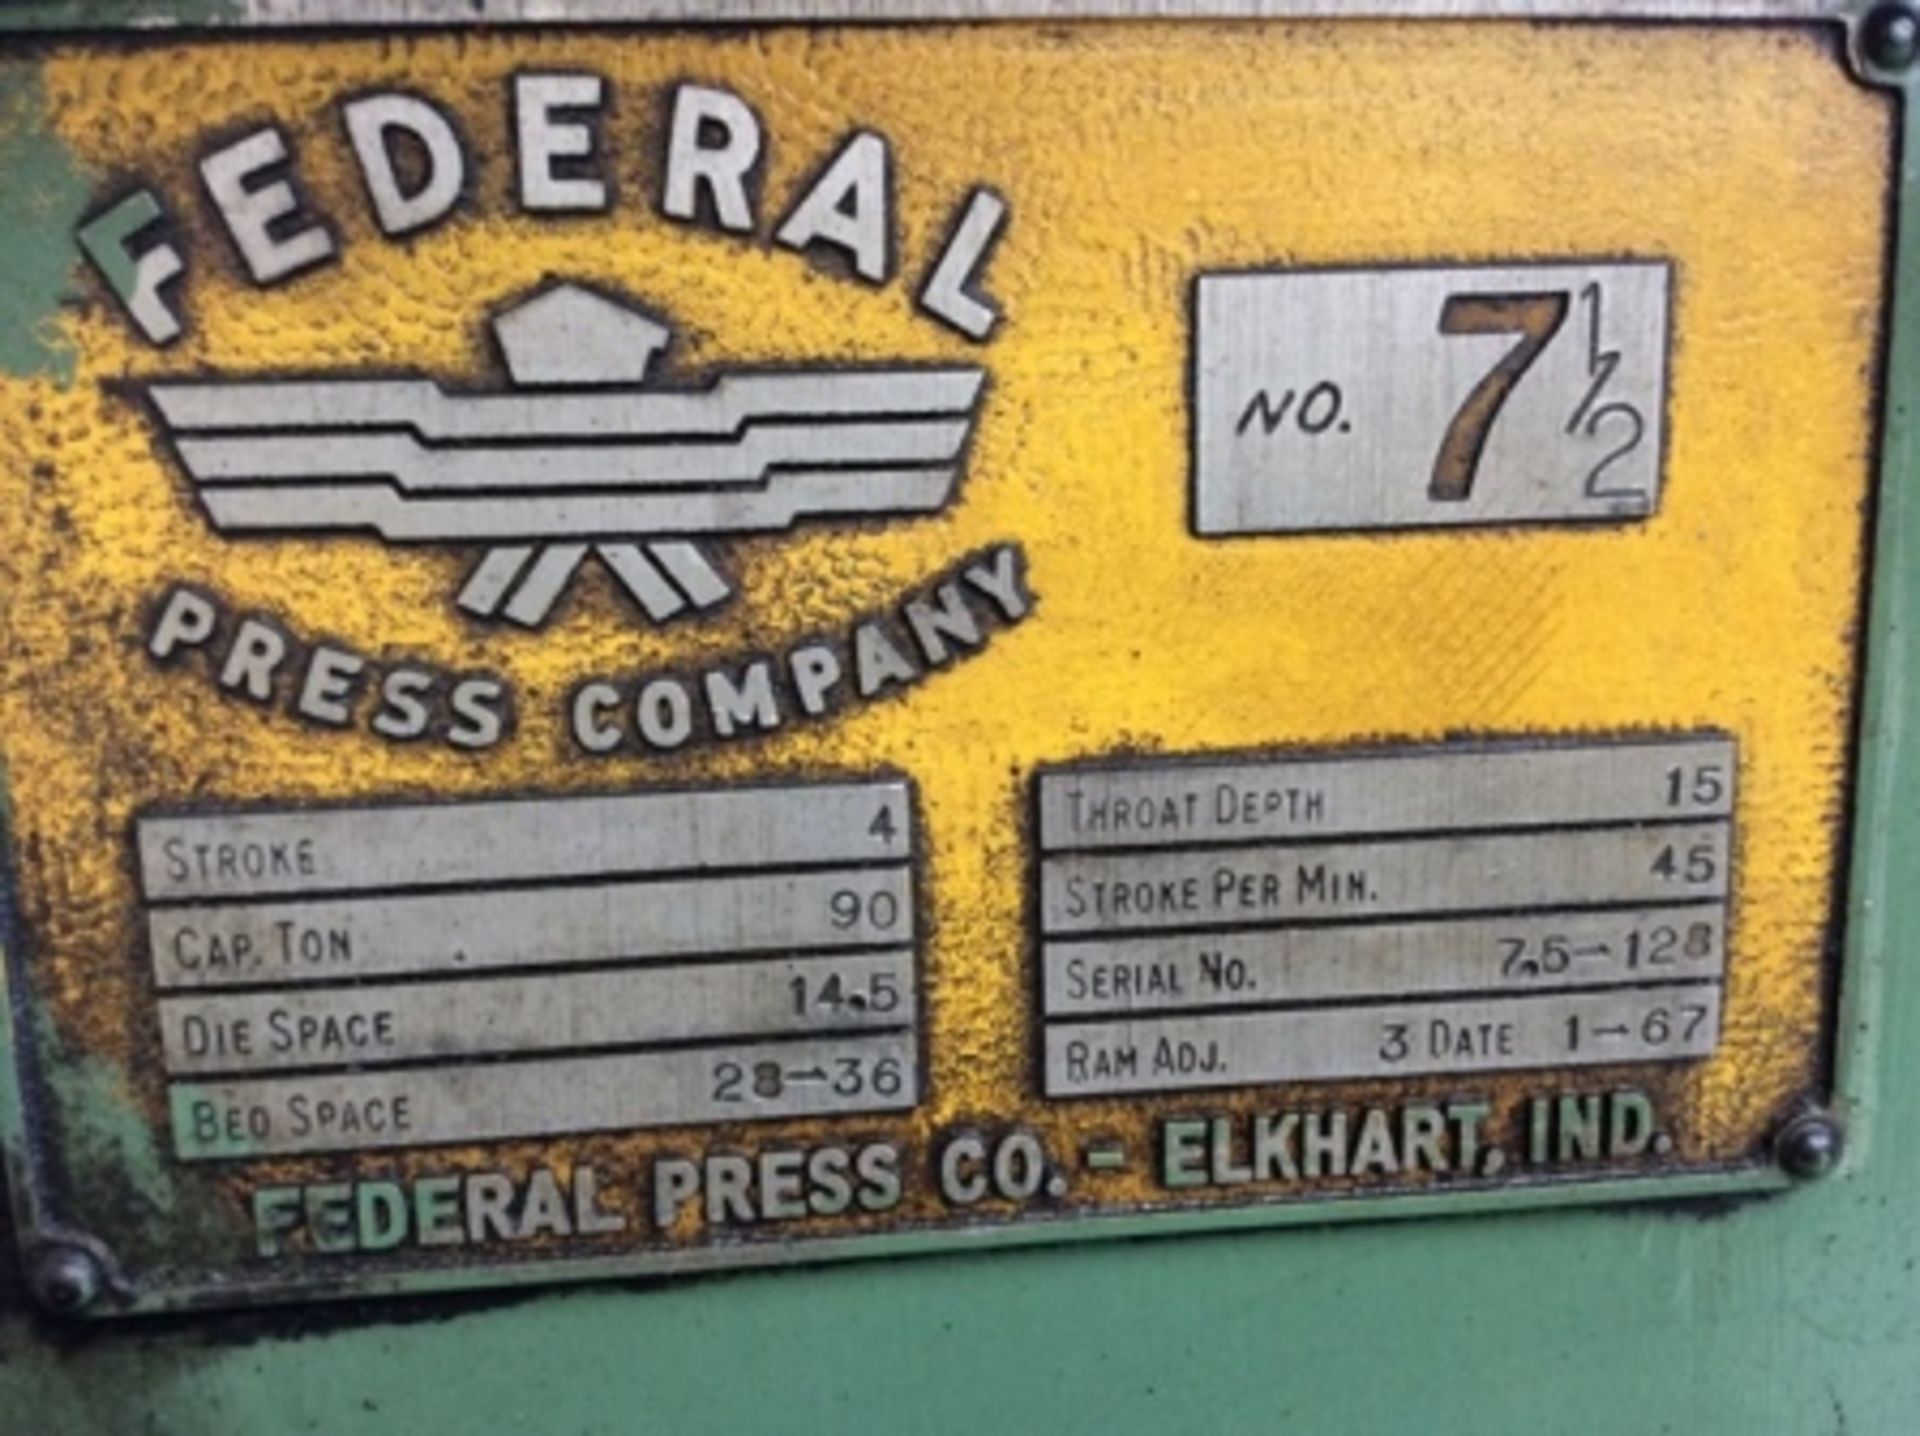 Federal brand die cutter series 7.5-128 cap. 90 Ton … - Image 7 of 8